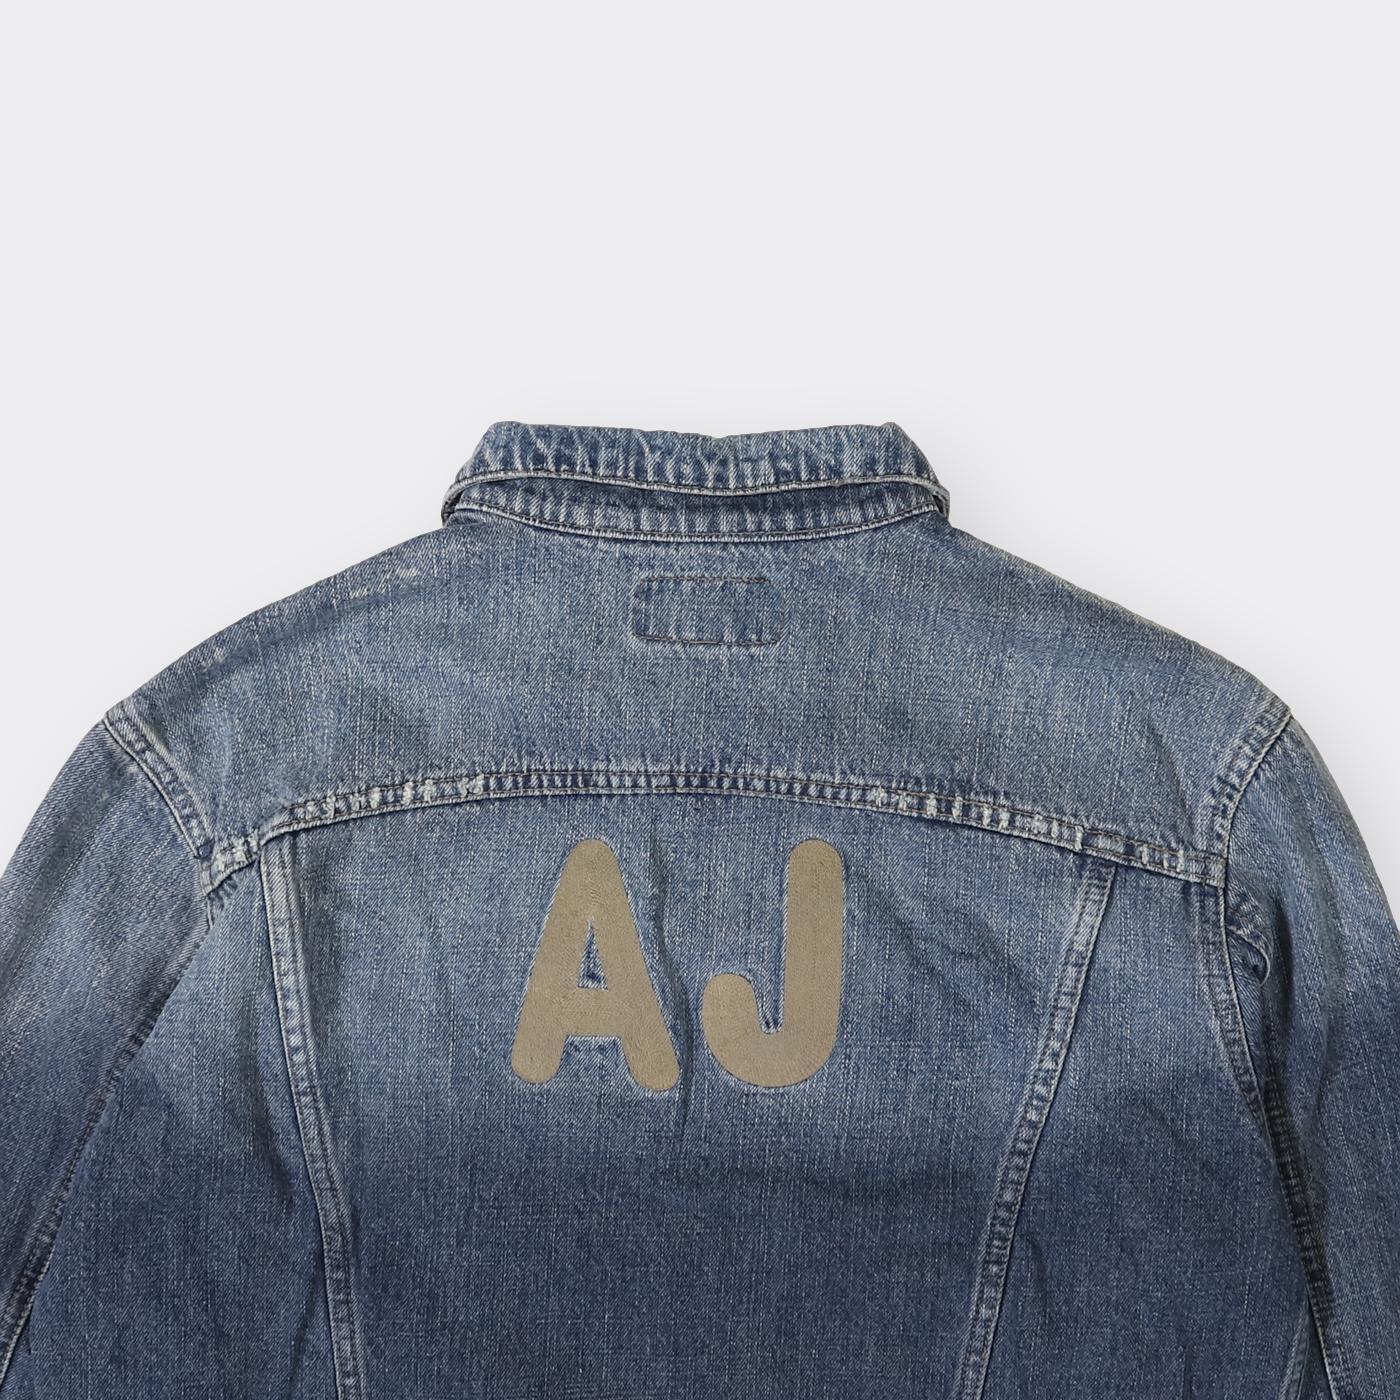 Armani Vintage Denim Jacket - Small - Known Source